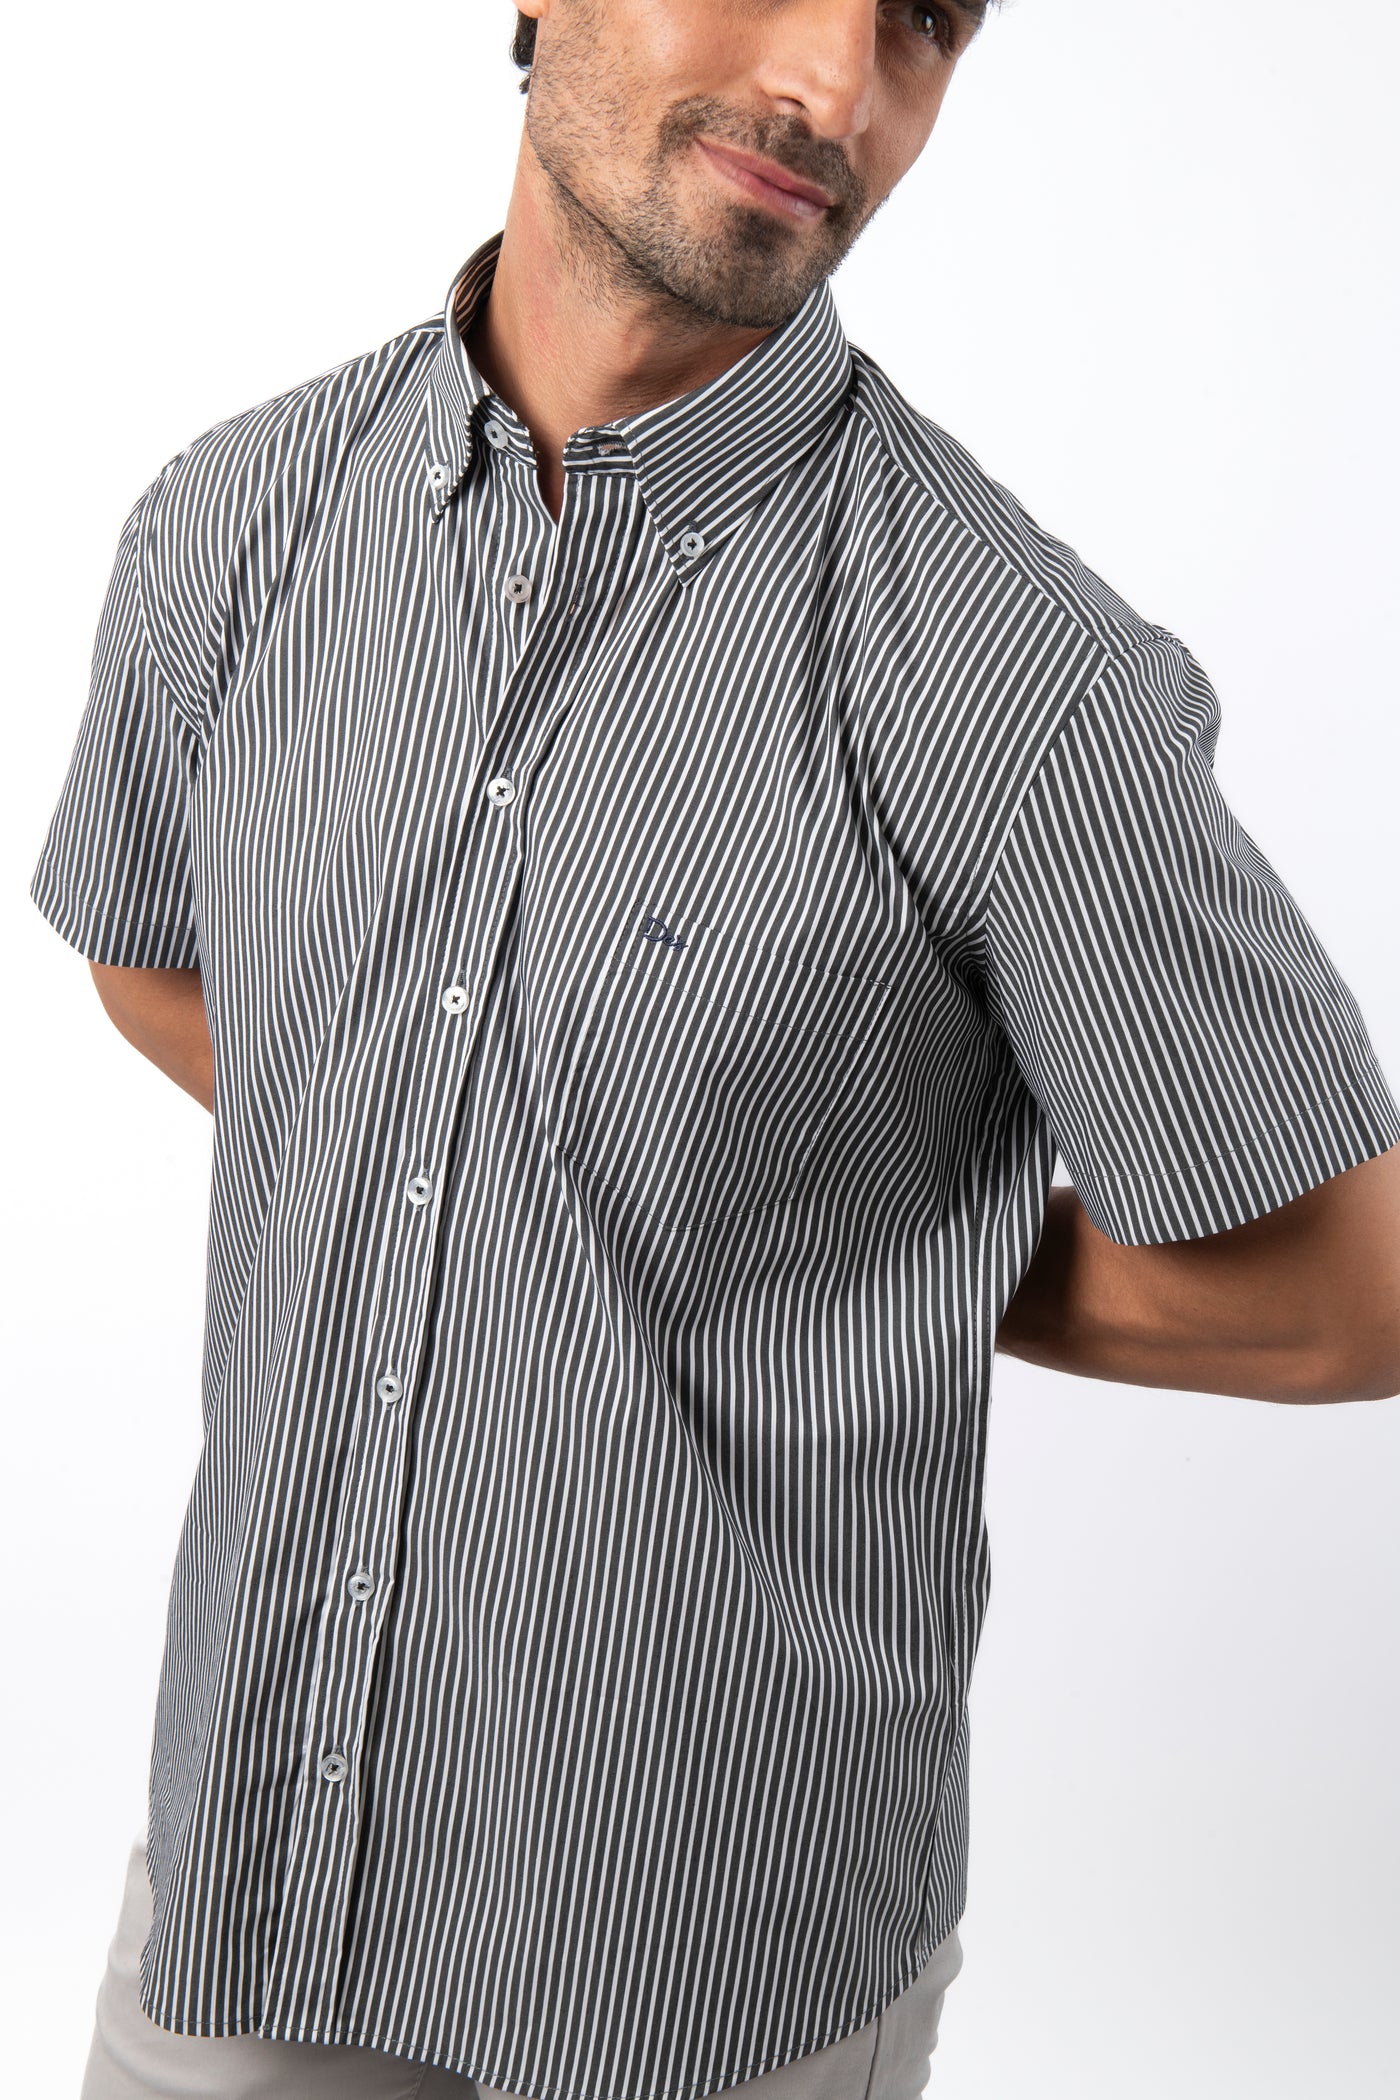 Striped Black & White Cotton Short Sleeves Shirt